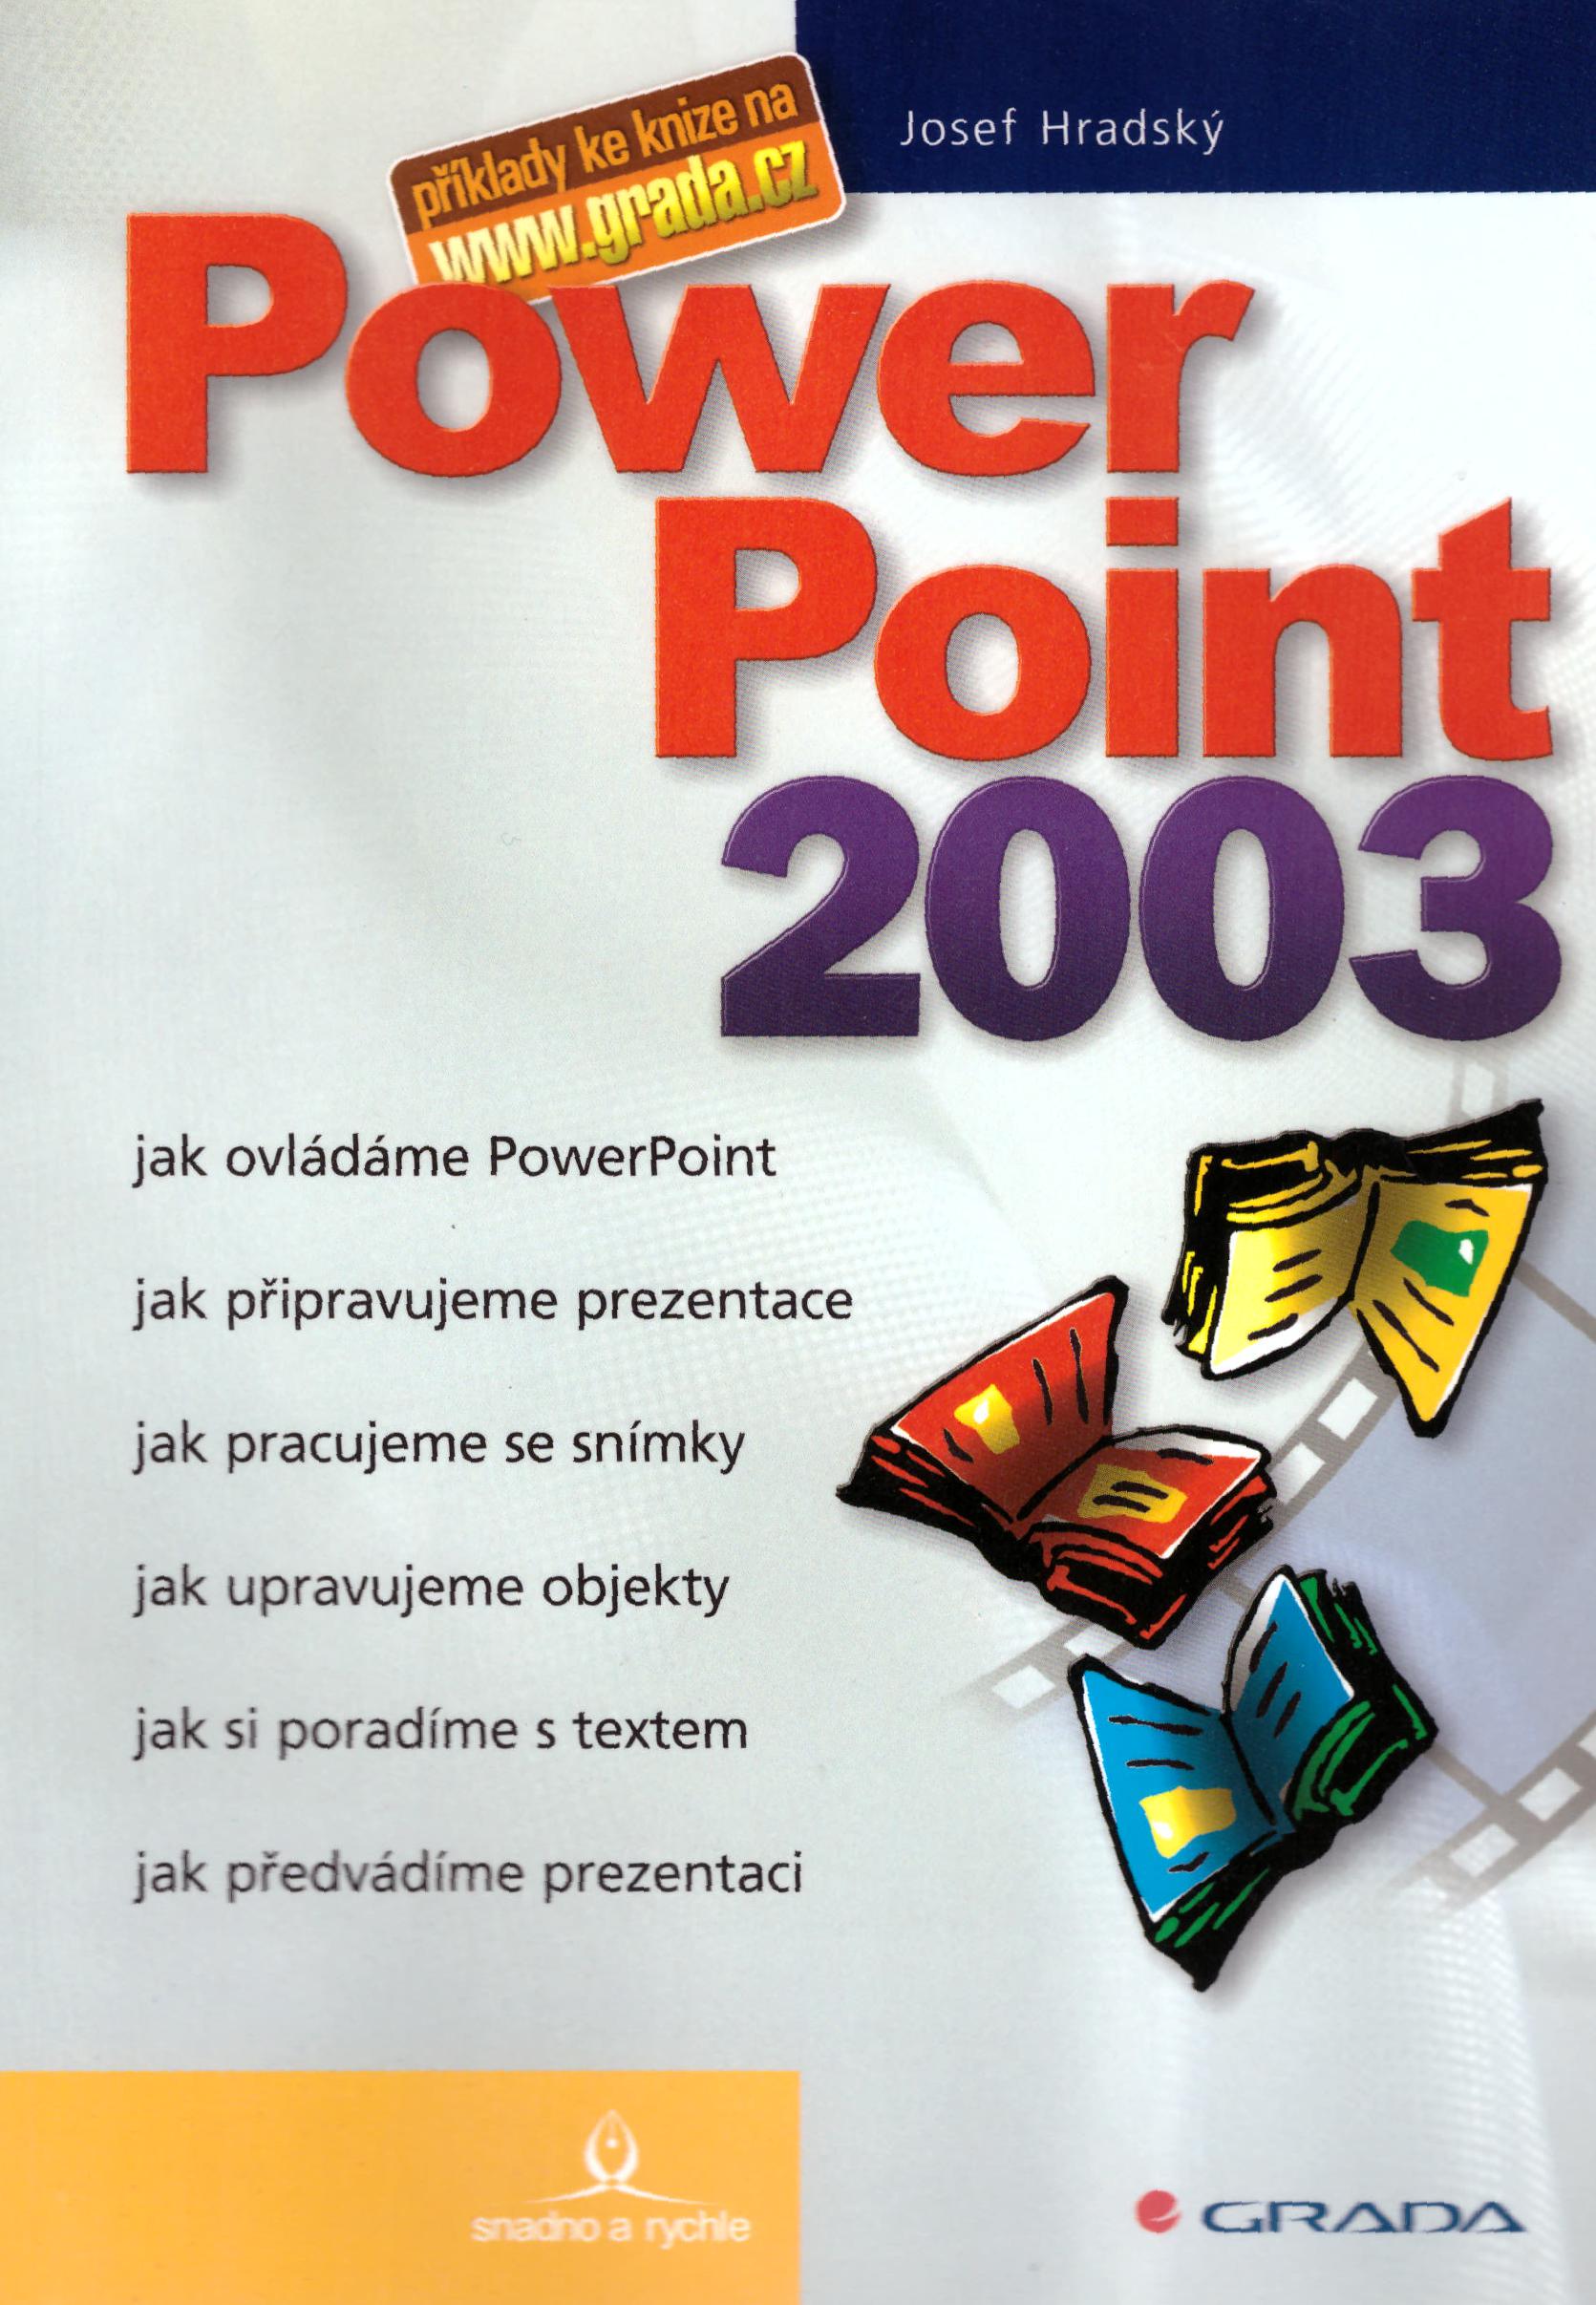 PowerPoint 2003